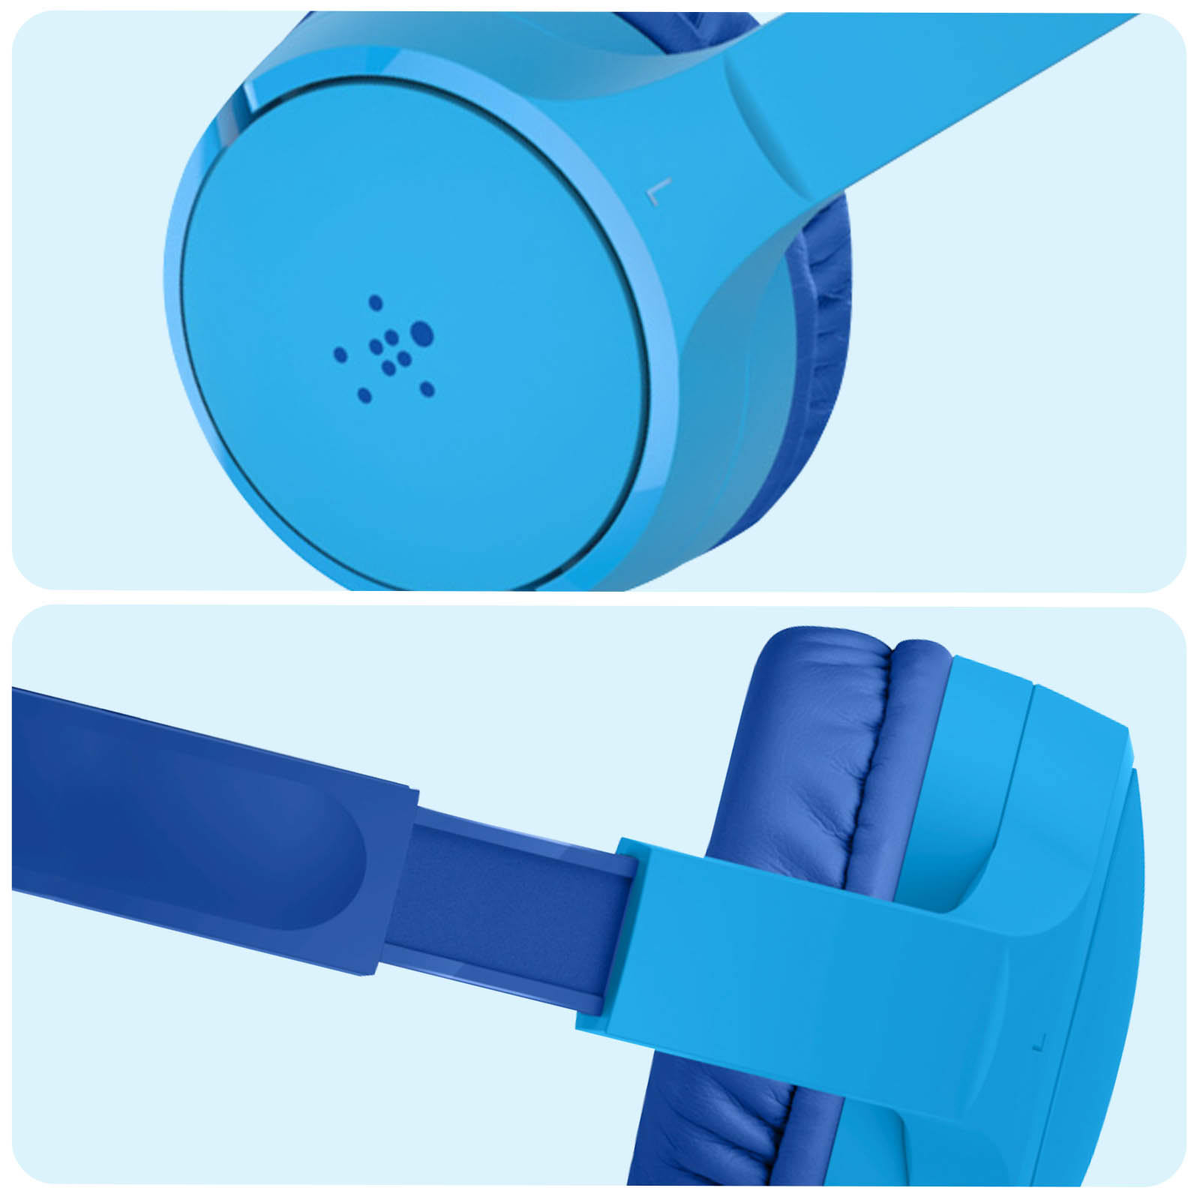 BELKIN SOUNDFORM™ Mini, Bluetooth On-Ear-Kinderkopfhörer blau On-ear